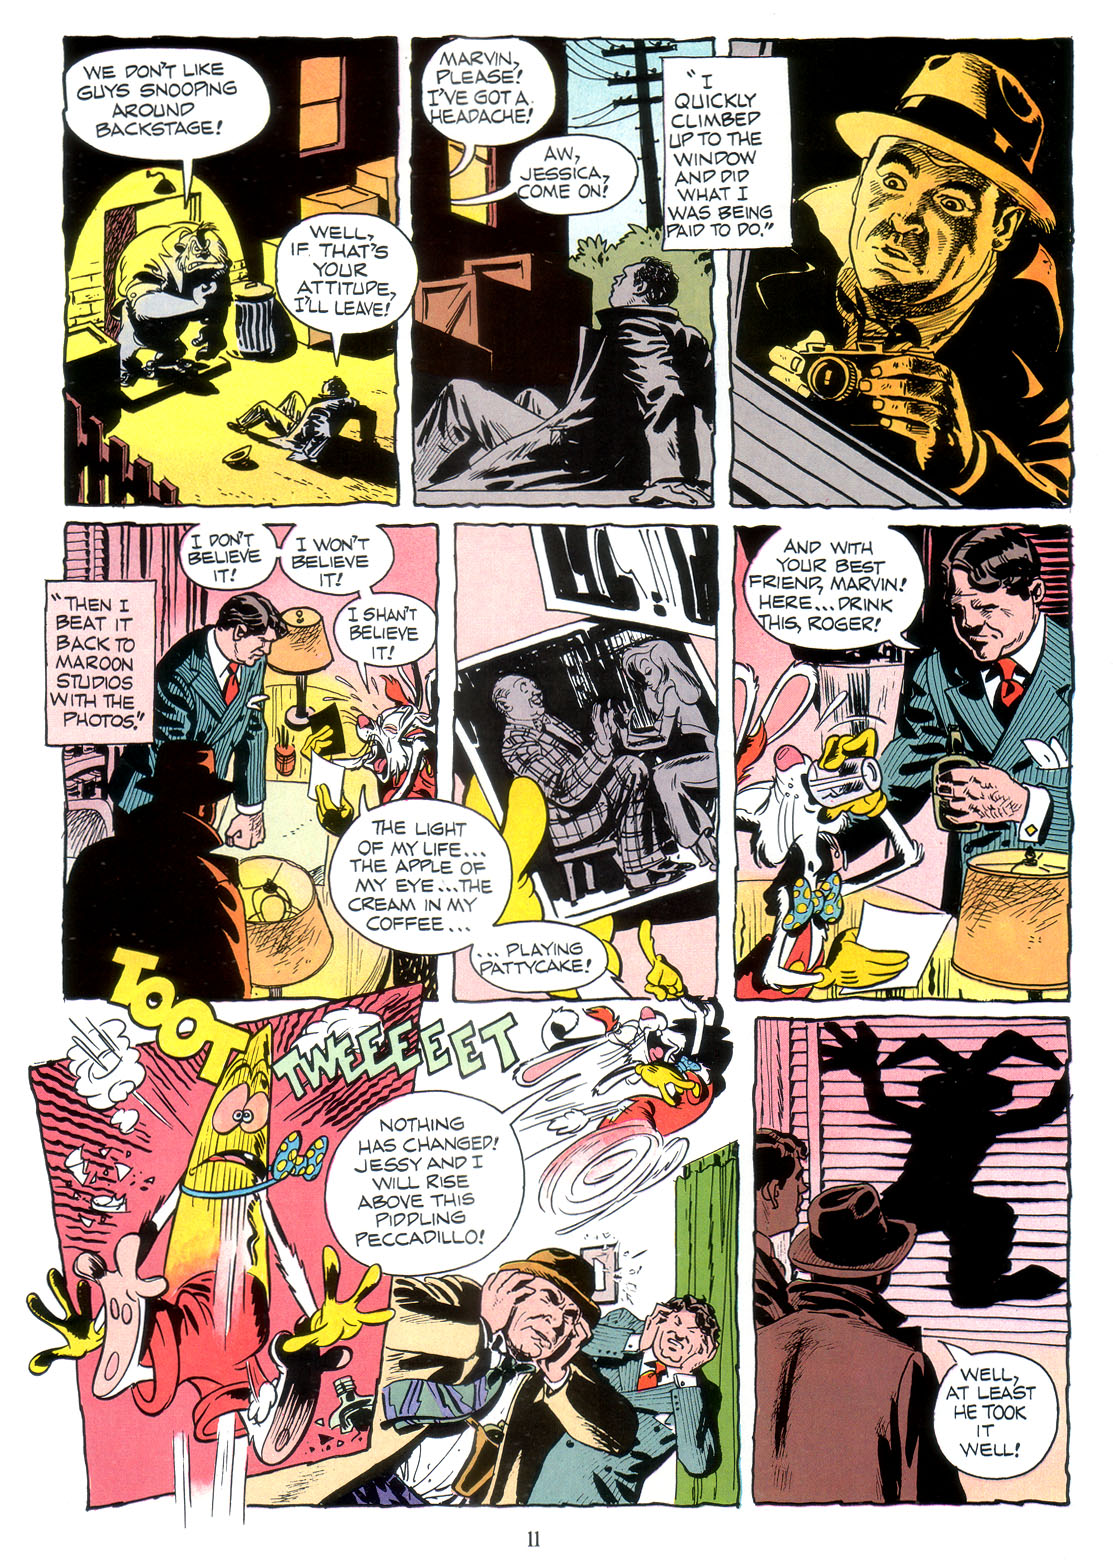 Marvel Graphic Novel issue 41 - Who Framed Roger Rabbit - Page 13